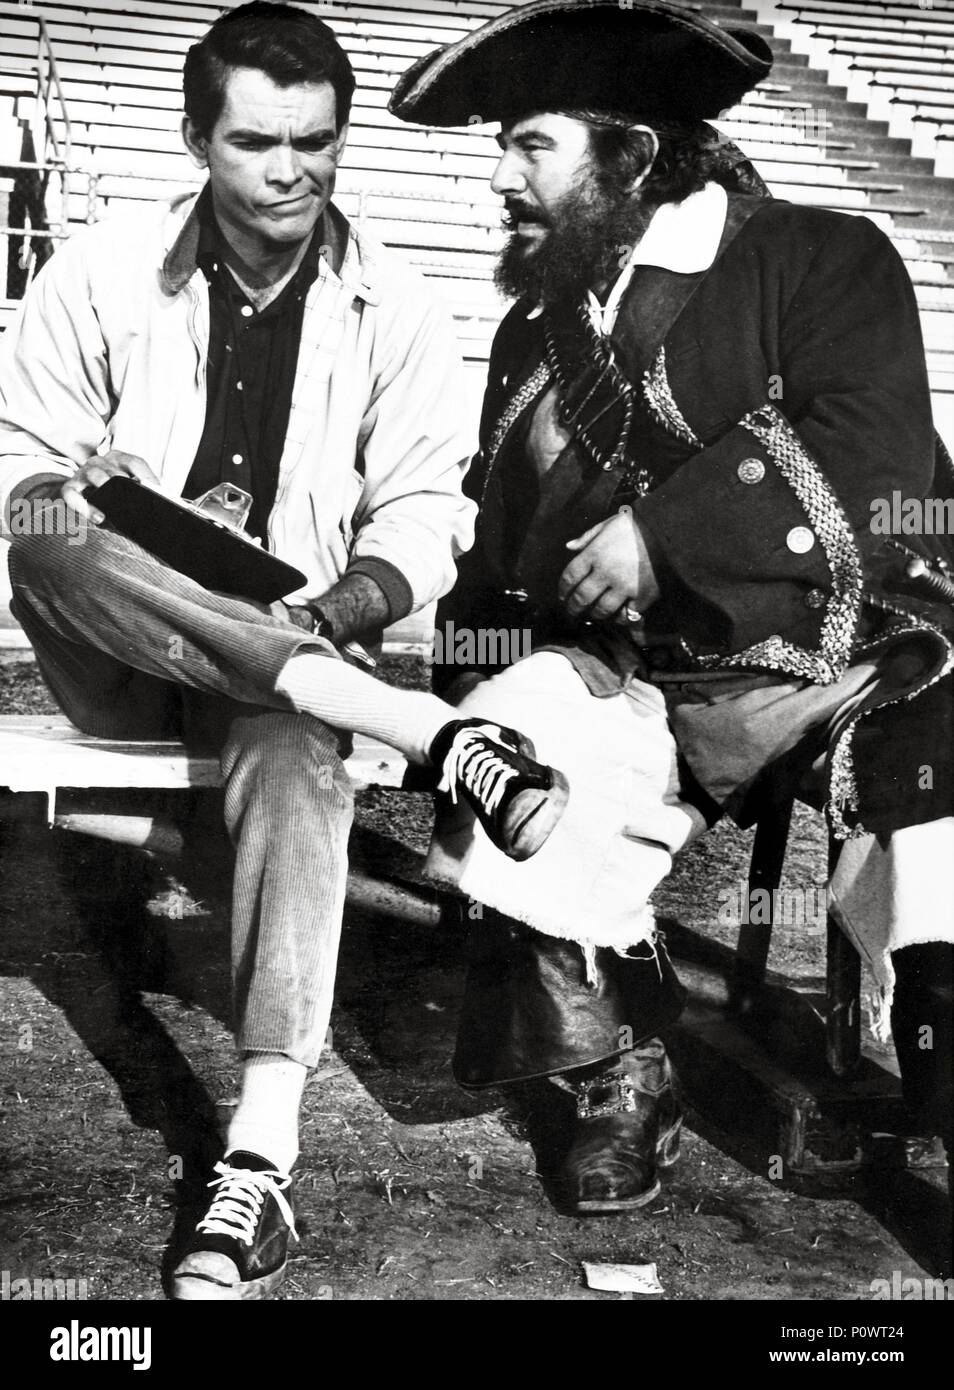 Original Film Title: BLACKBEARD'S GHOST.  English Title: BLACKBEARD'S GHOST.  Film Director: ROBERT STEVENSON.  Year: 1968.  Stars: DEAN JONES; PETER USTINOV. Credit: WALT DISNEY PRODUCTIONS / Album Stock Photo